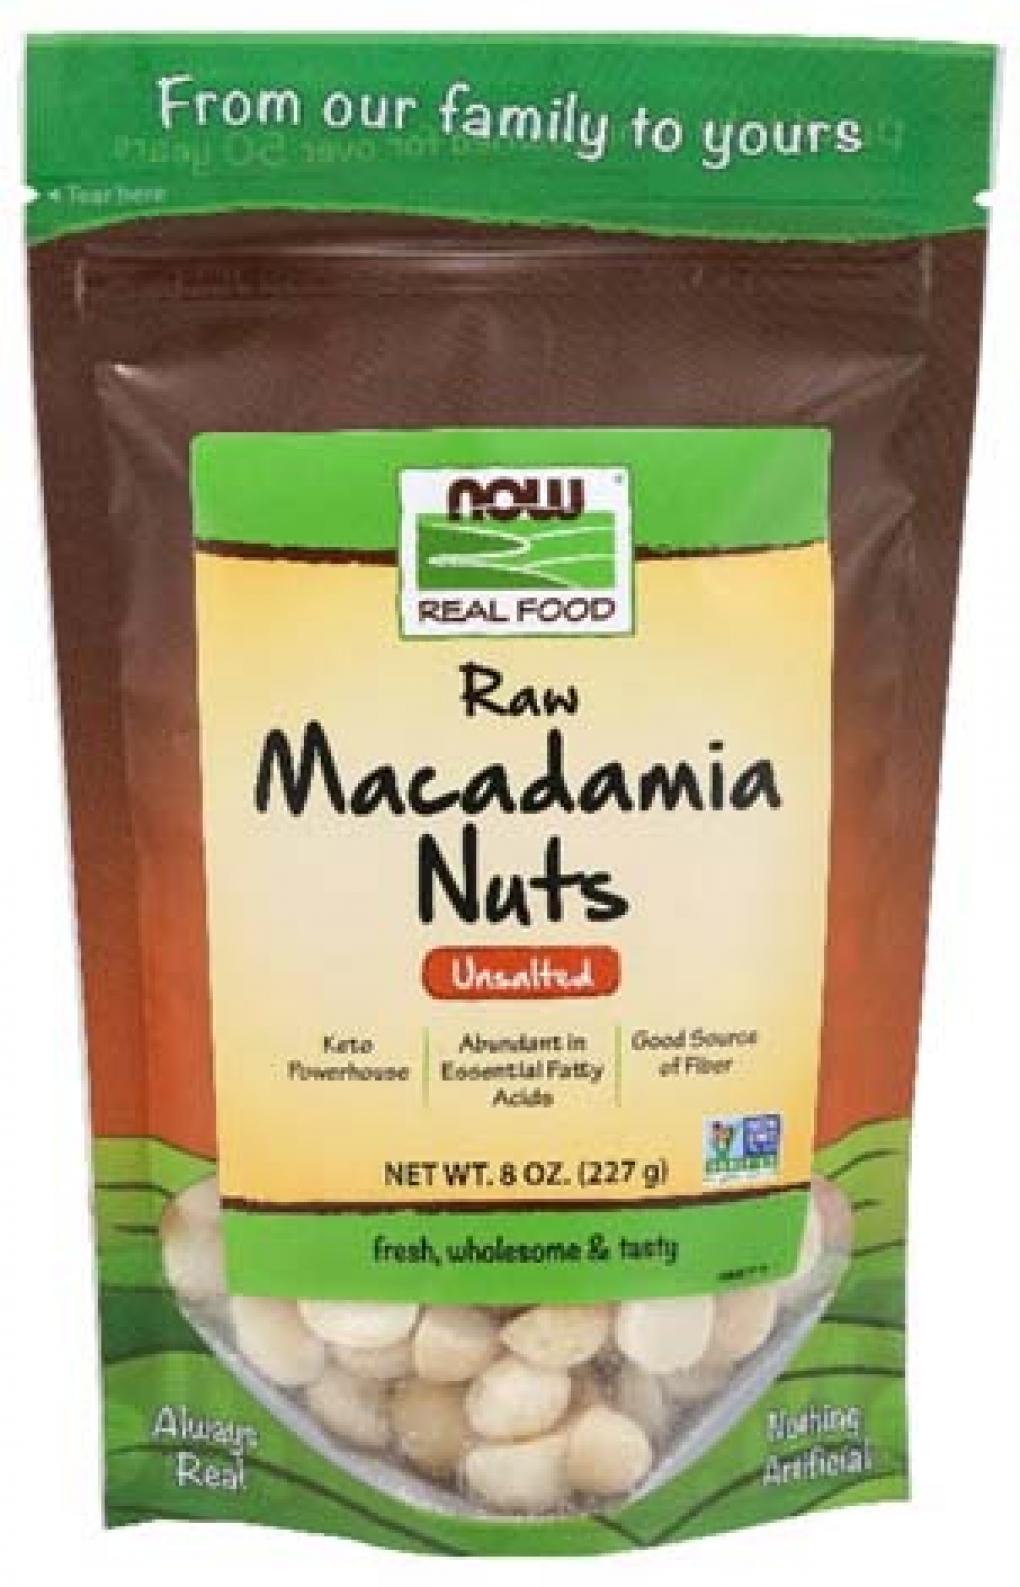 Recalled macadamia nuts